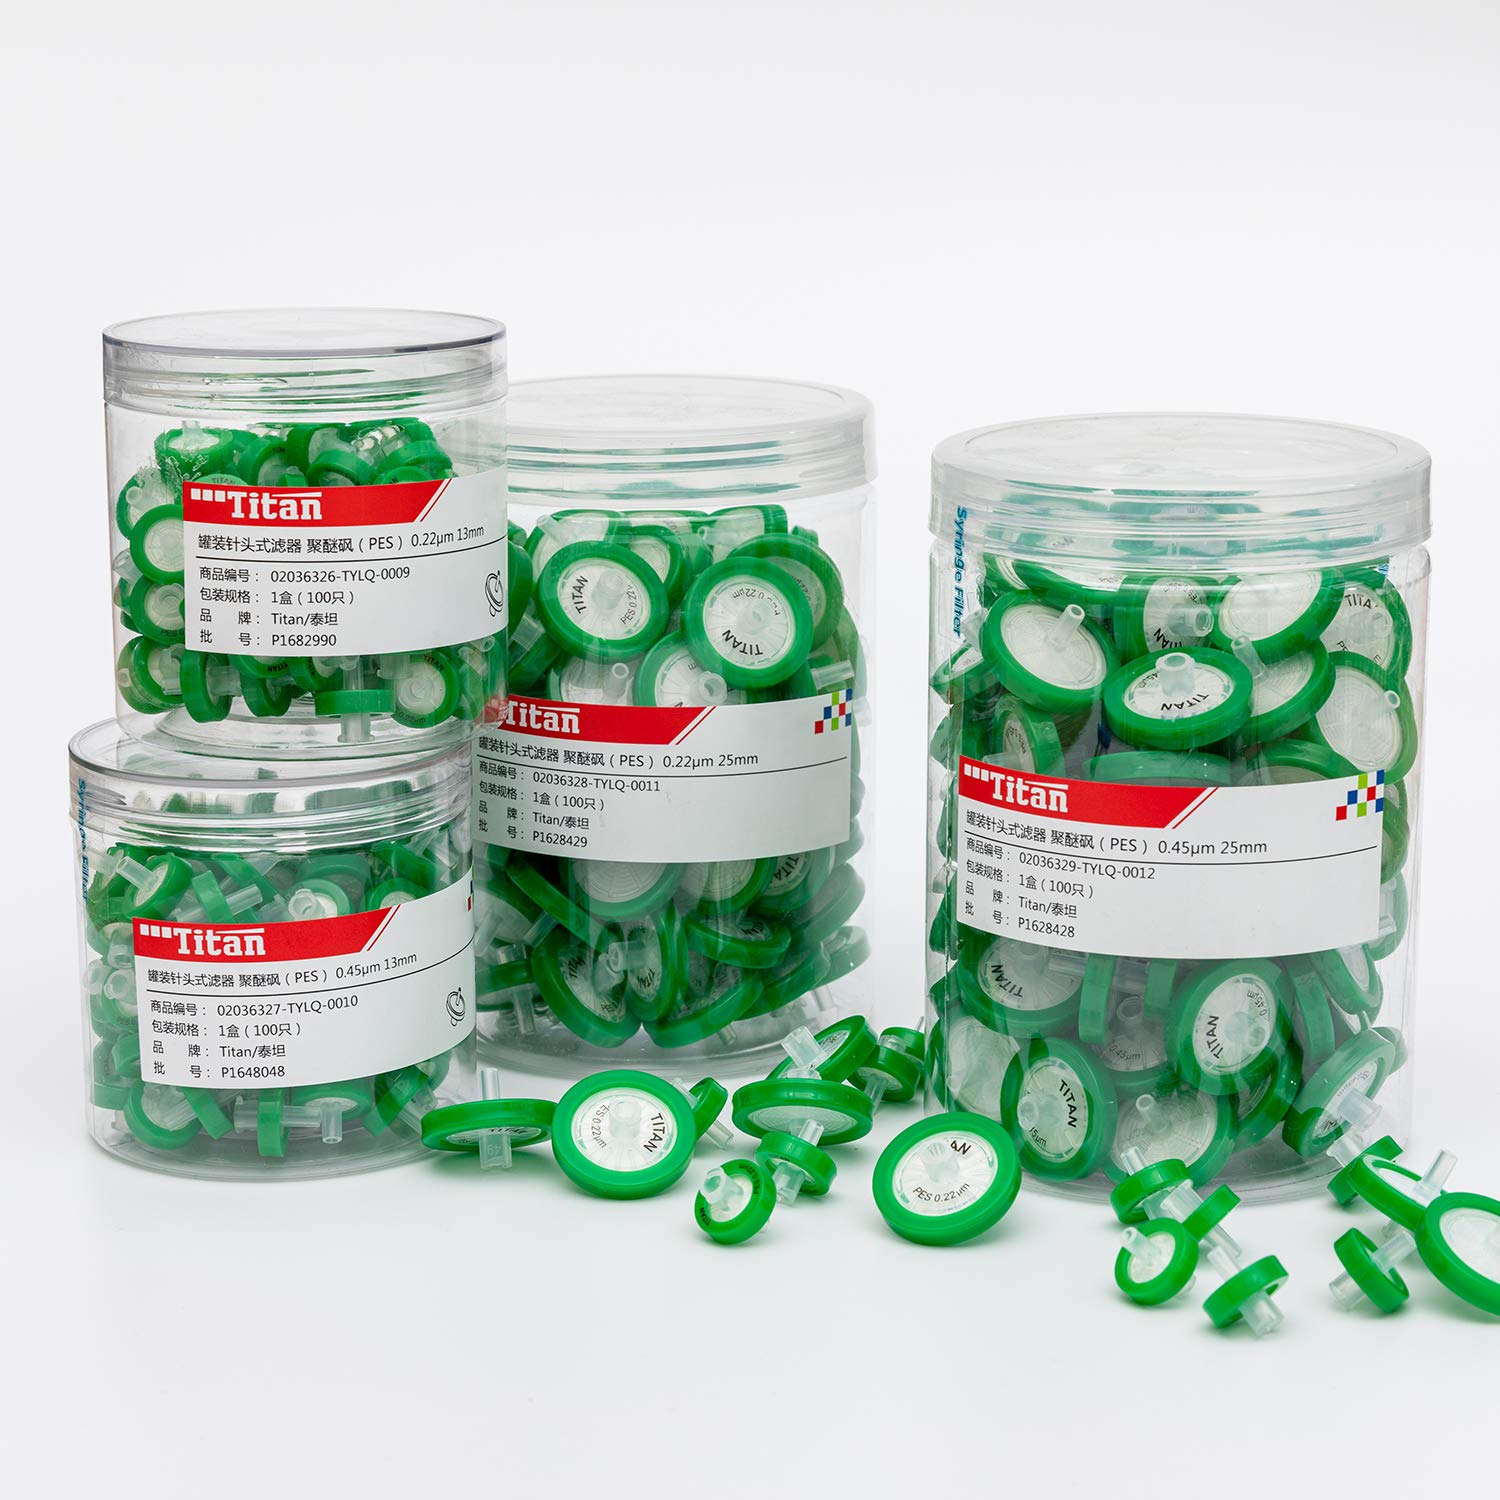 Adamas-Beta Syringe Filter,Syringe Lab Filters, PES (Polyethersulfone) 13mm Diameter 0.22μm Pore Size,Non Sterile Filtration,Green